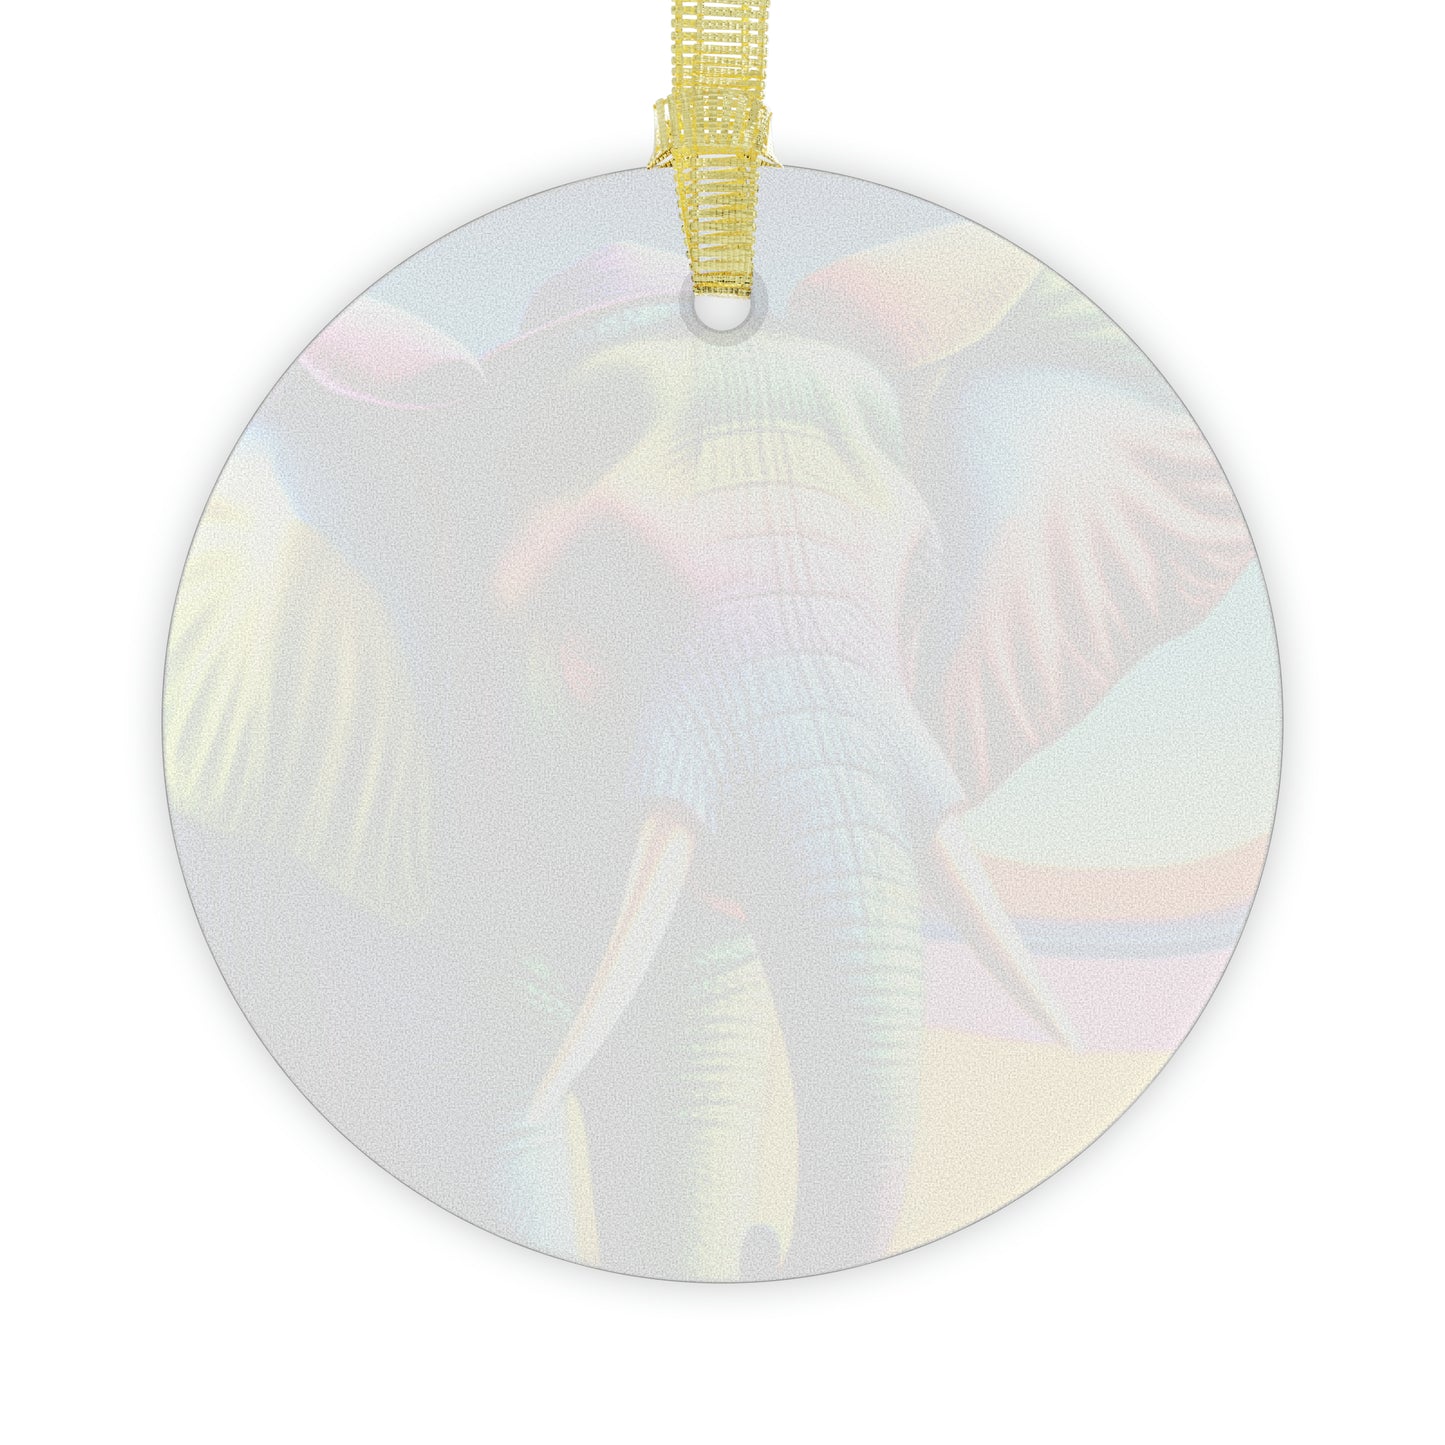 Rainbow elephant Glass Ornament